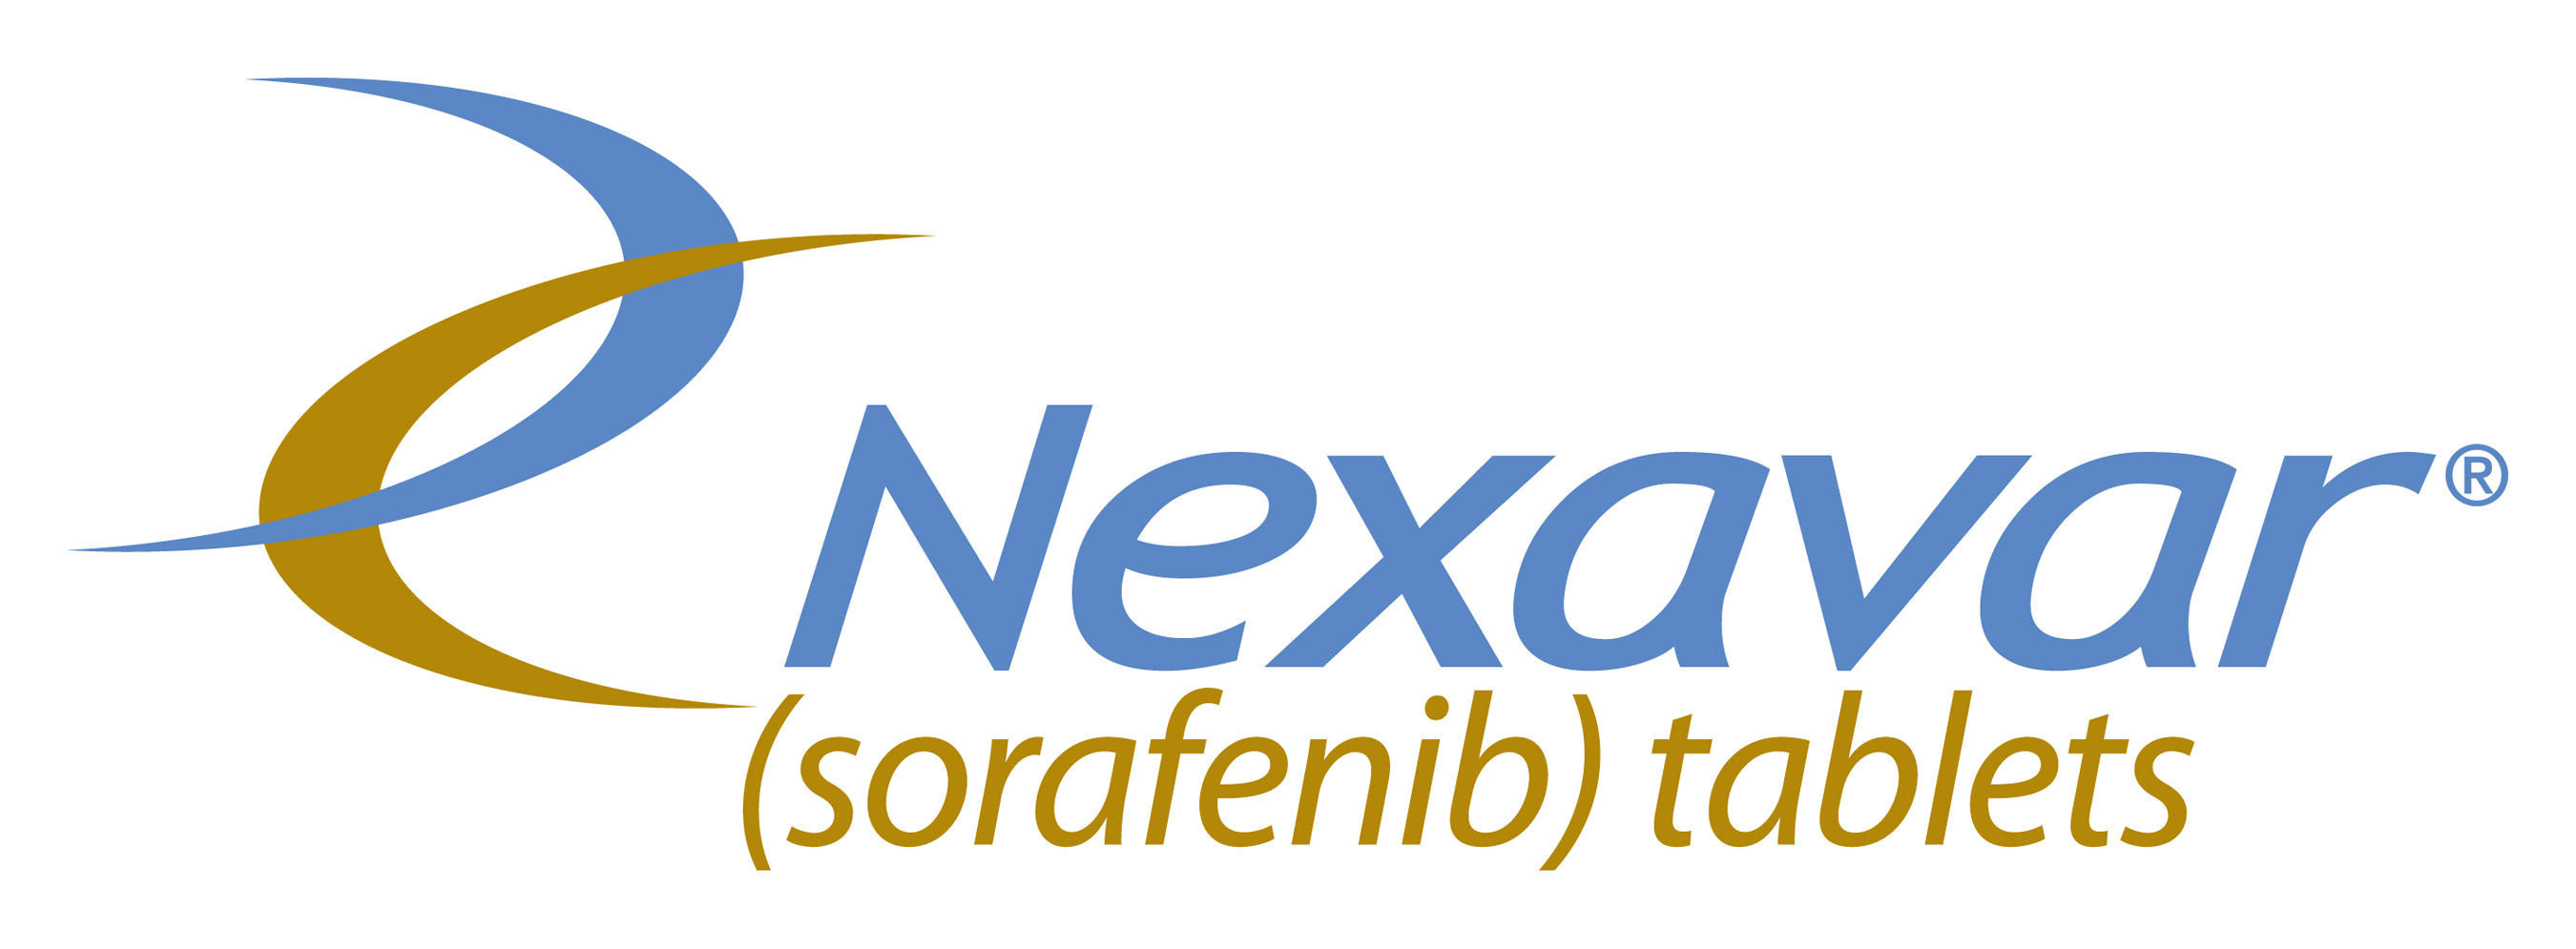 Bayer and Onyx's Nexavar(R) (sorafenib) Receives U.S. FDA Approval for New Indication. (PRNewsFoto/Bayer HealthCare and Onyx Pharmaceuticals, Inc., an Amgen subsidiary) (PRNewsFoto/BAYER HEALTHCARE AND ONYX ...)